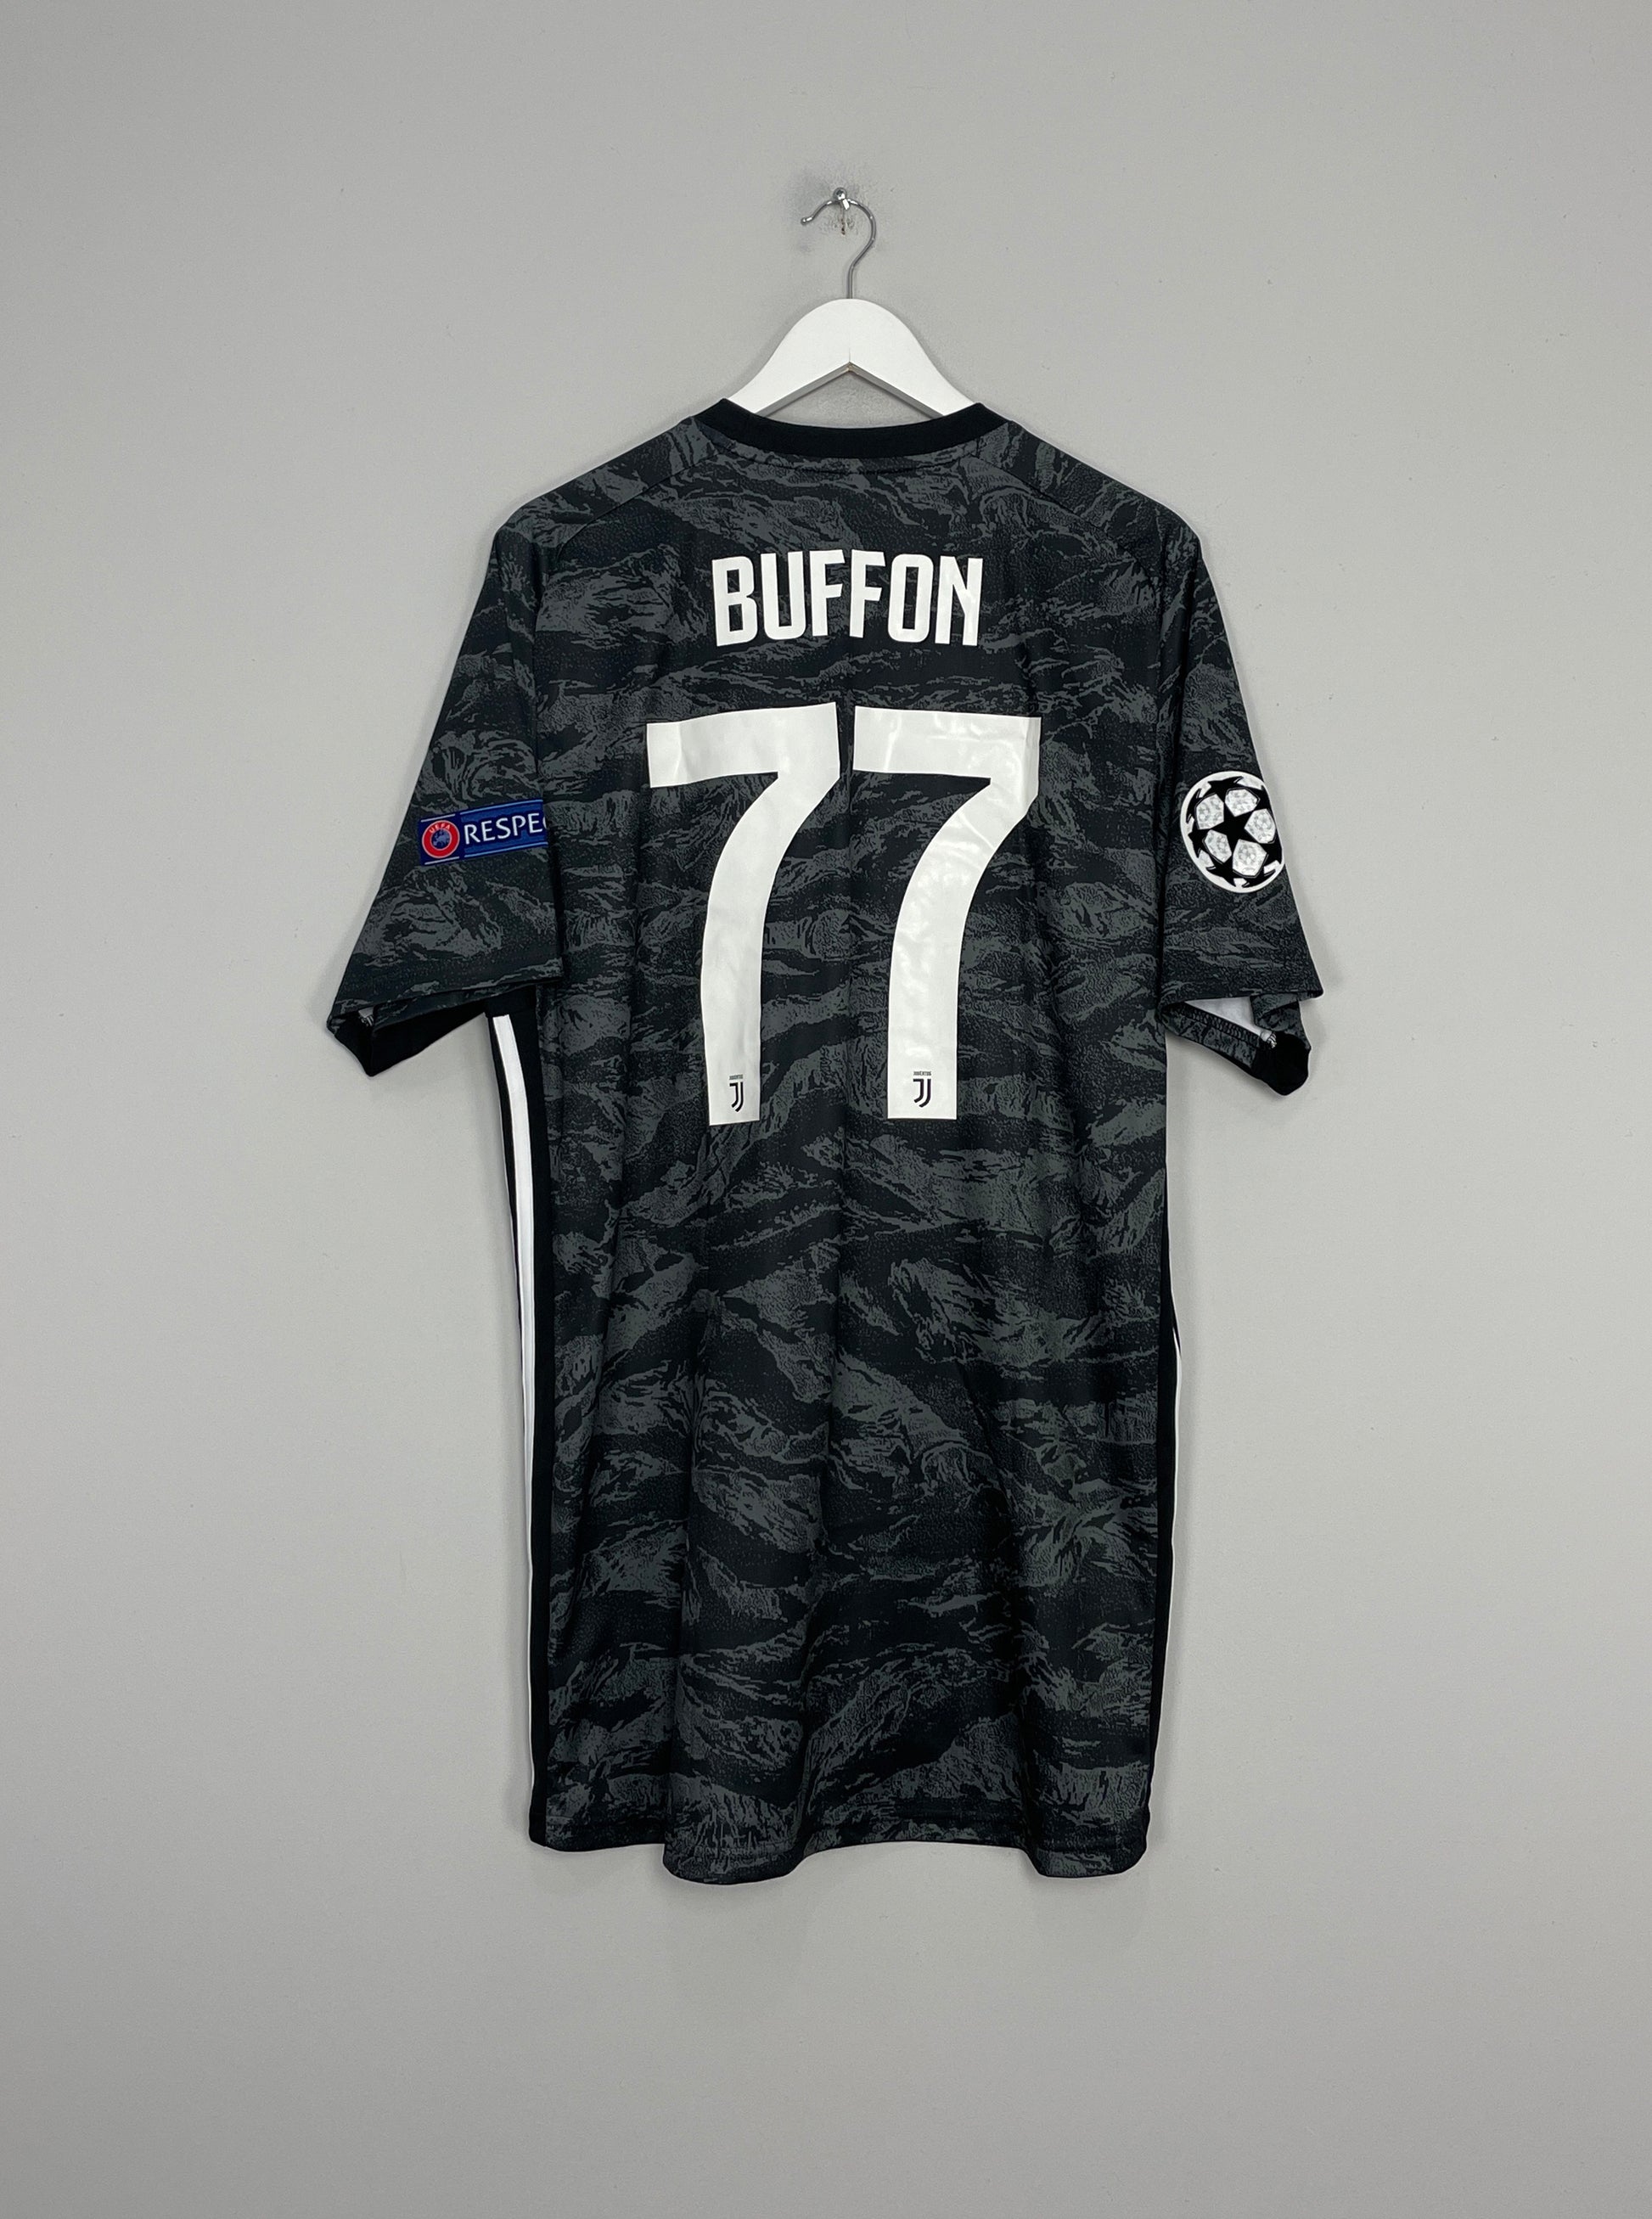 Image of the Juventus Buffon shirt from the 2019/20 season